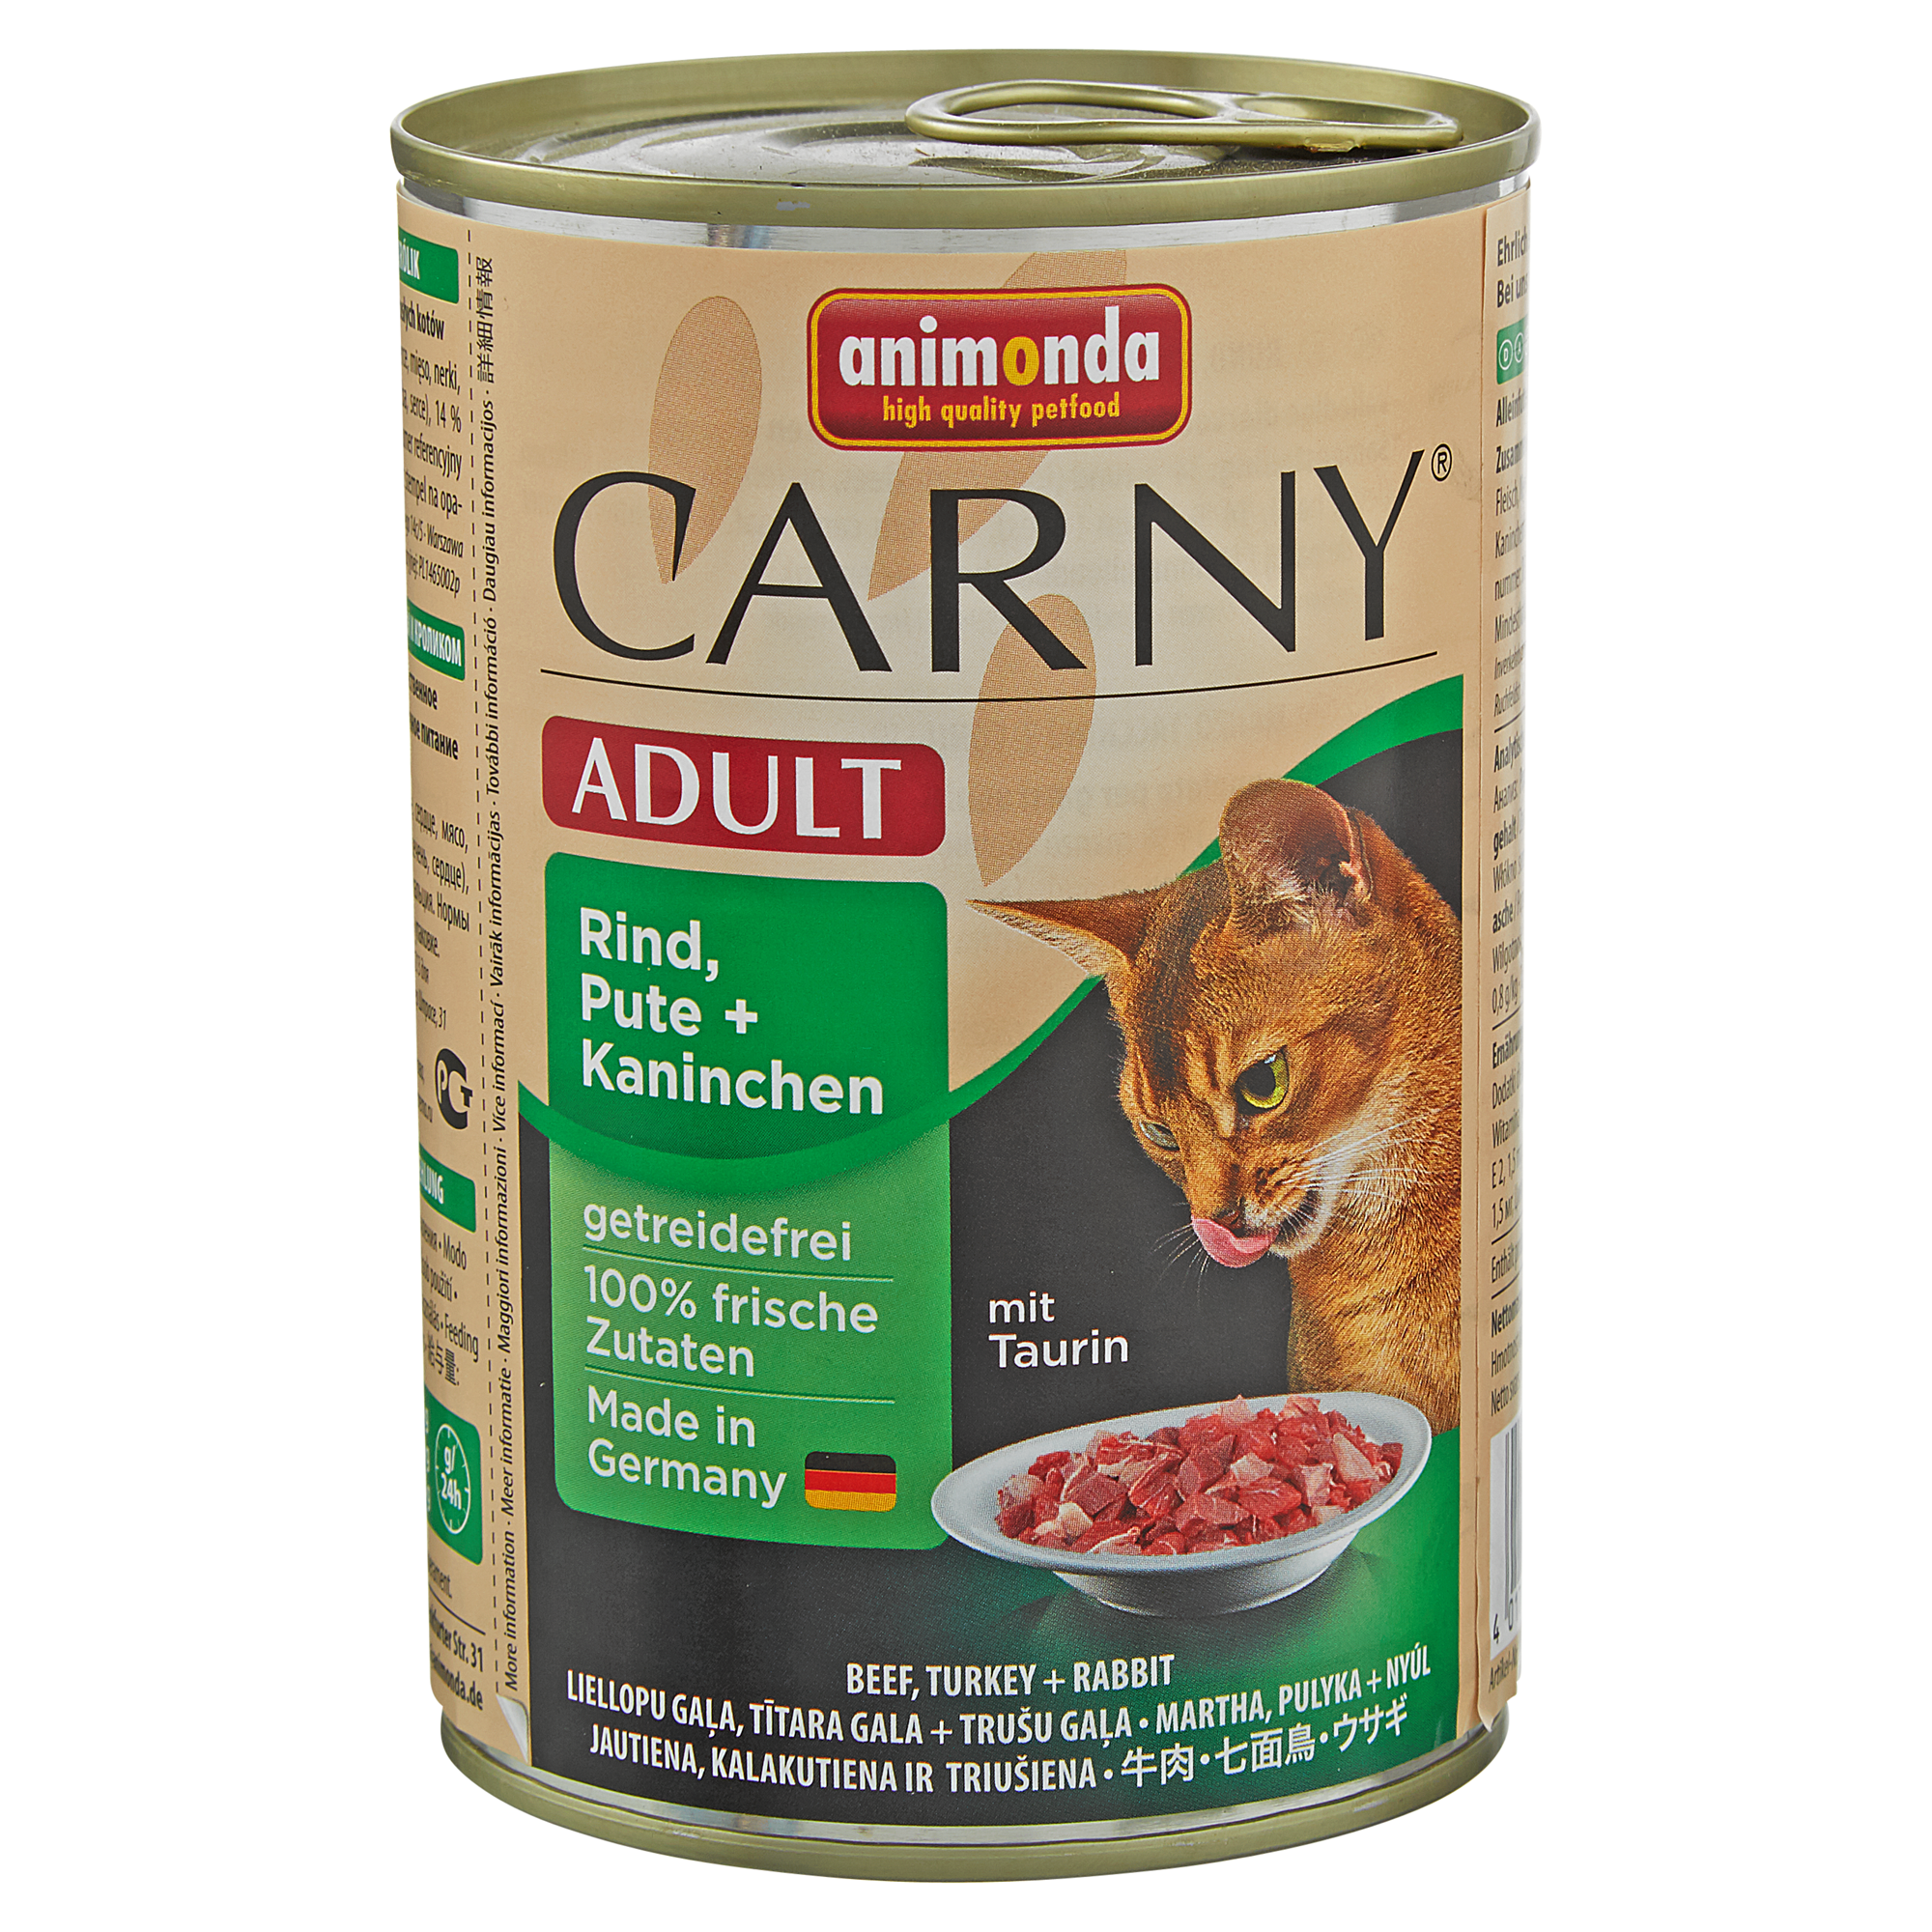 Katzennassfutter "Carny" Adult mit Rind/Pute/Kaninchen 400 g + product picture